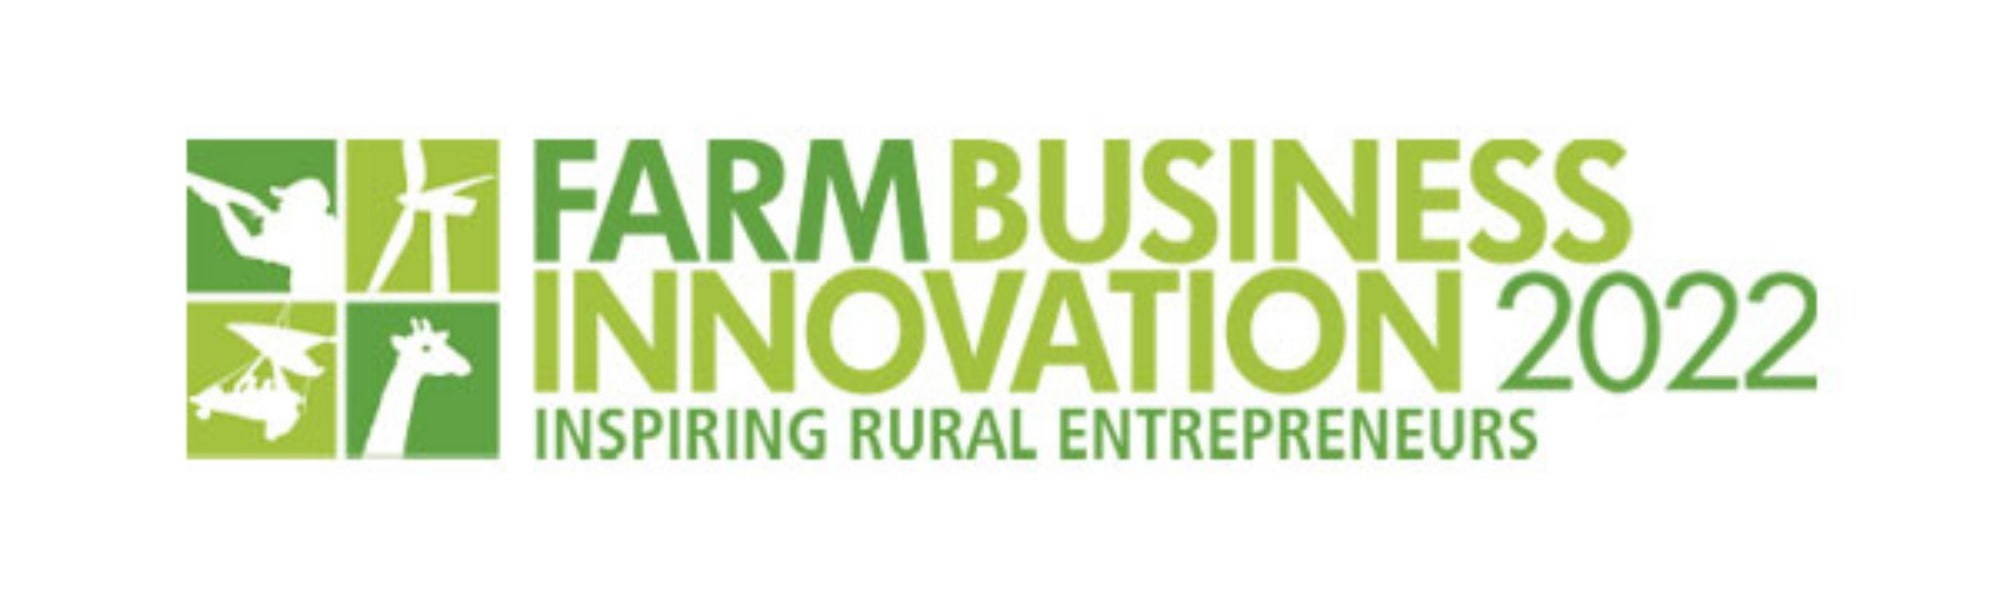 Farm Business Innovation Show 